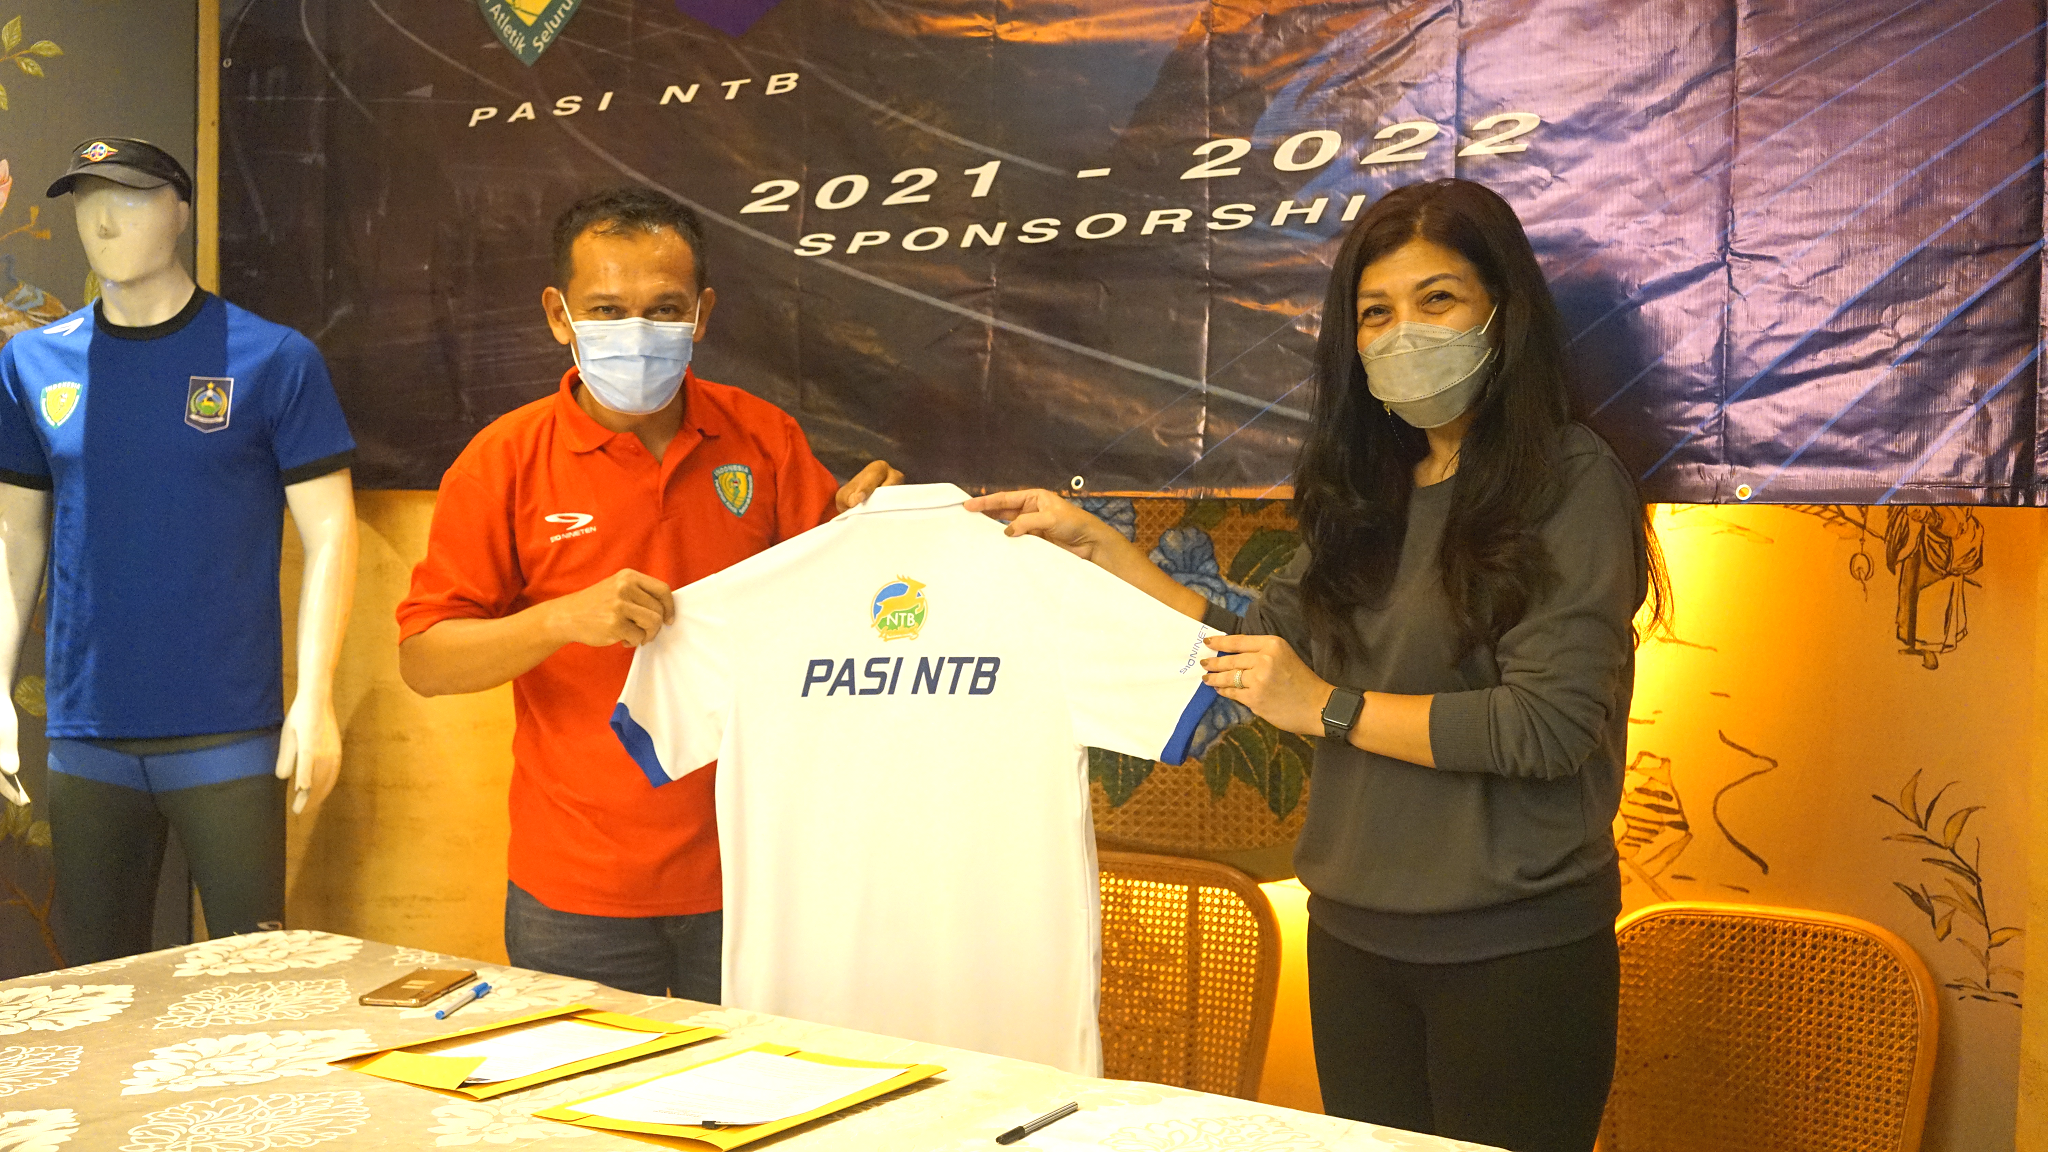 Sambut PON Papua 2021, Brand Sepatu 910 Nineten Support Atlet PASI NTB